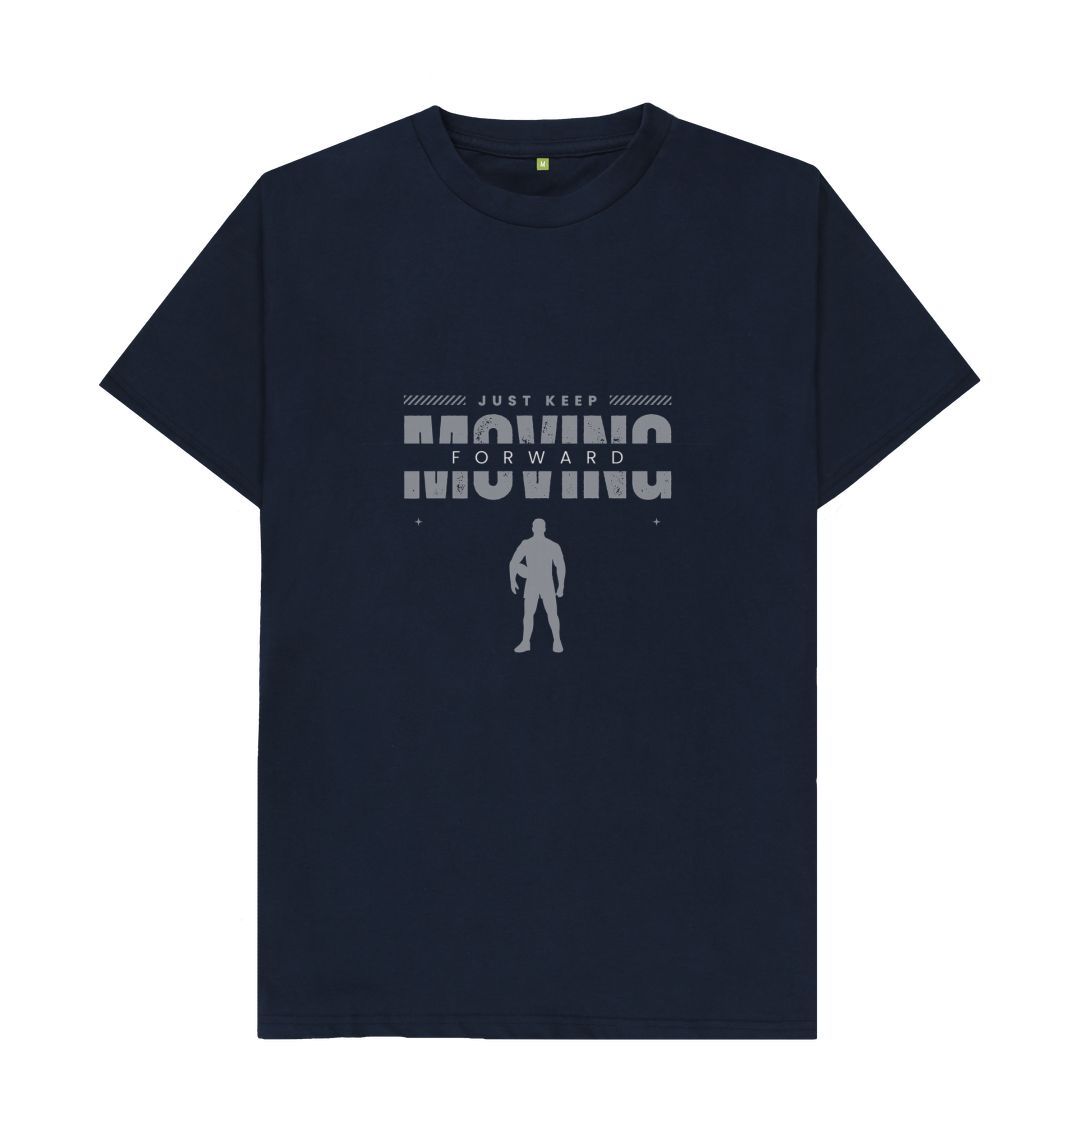 Navy Blue Adults - Just keep moving forward -T-shirt